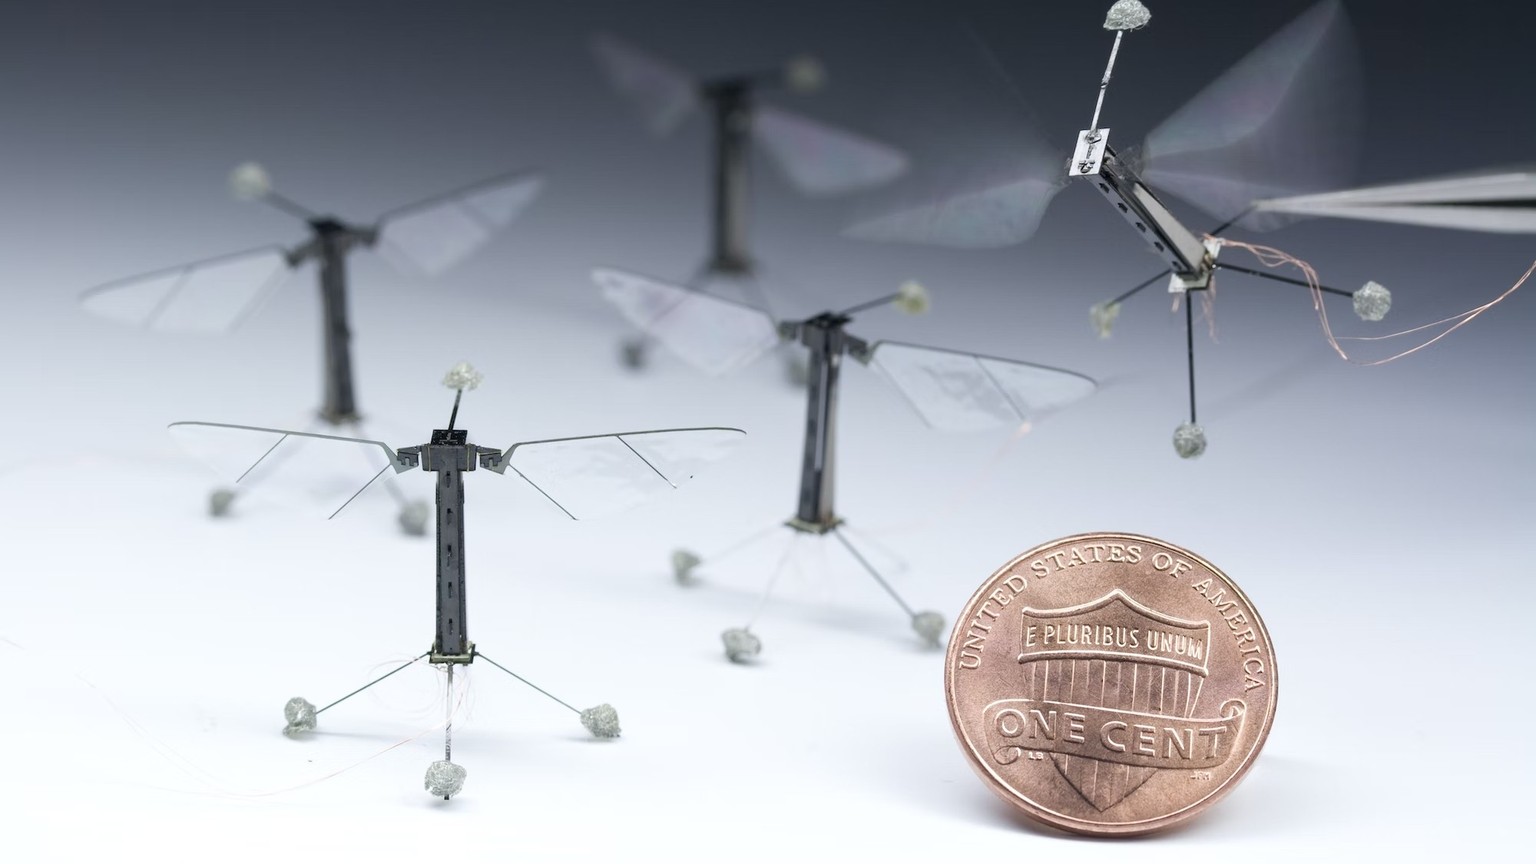 Roboterbienen
https://wyss.harvard.edu/technology/robobees-autonomous-flying-microrobots/